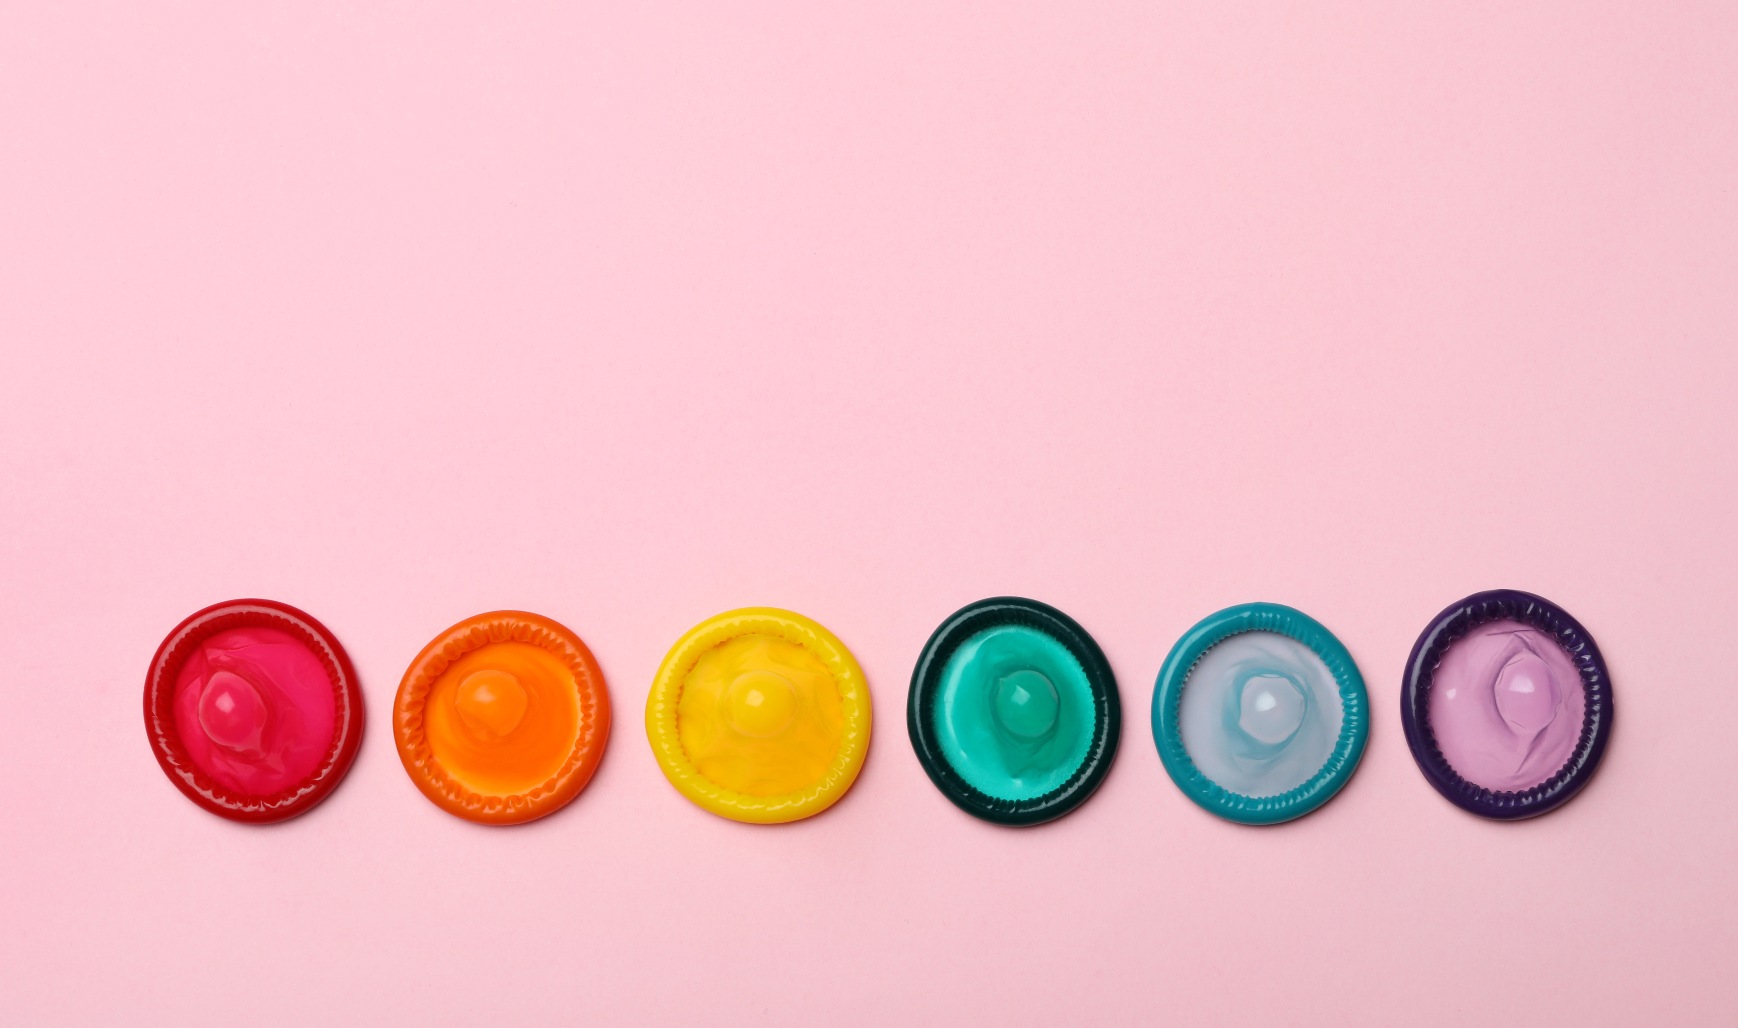 Coloured condoms arranged in a rainbow.